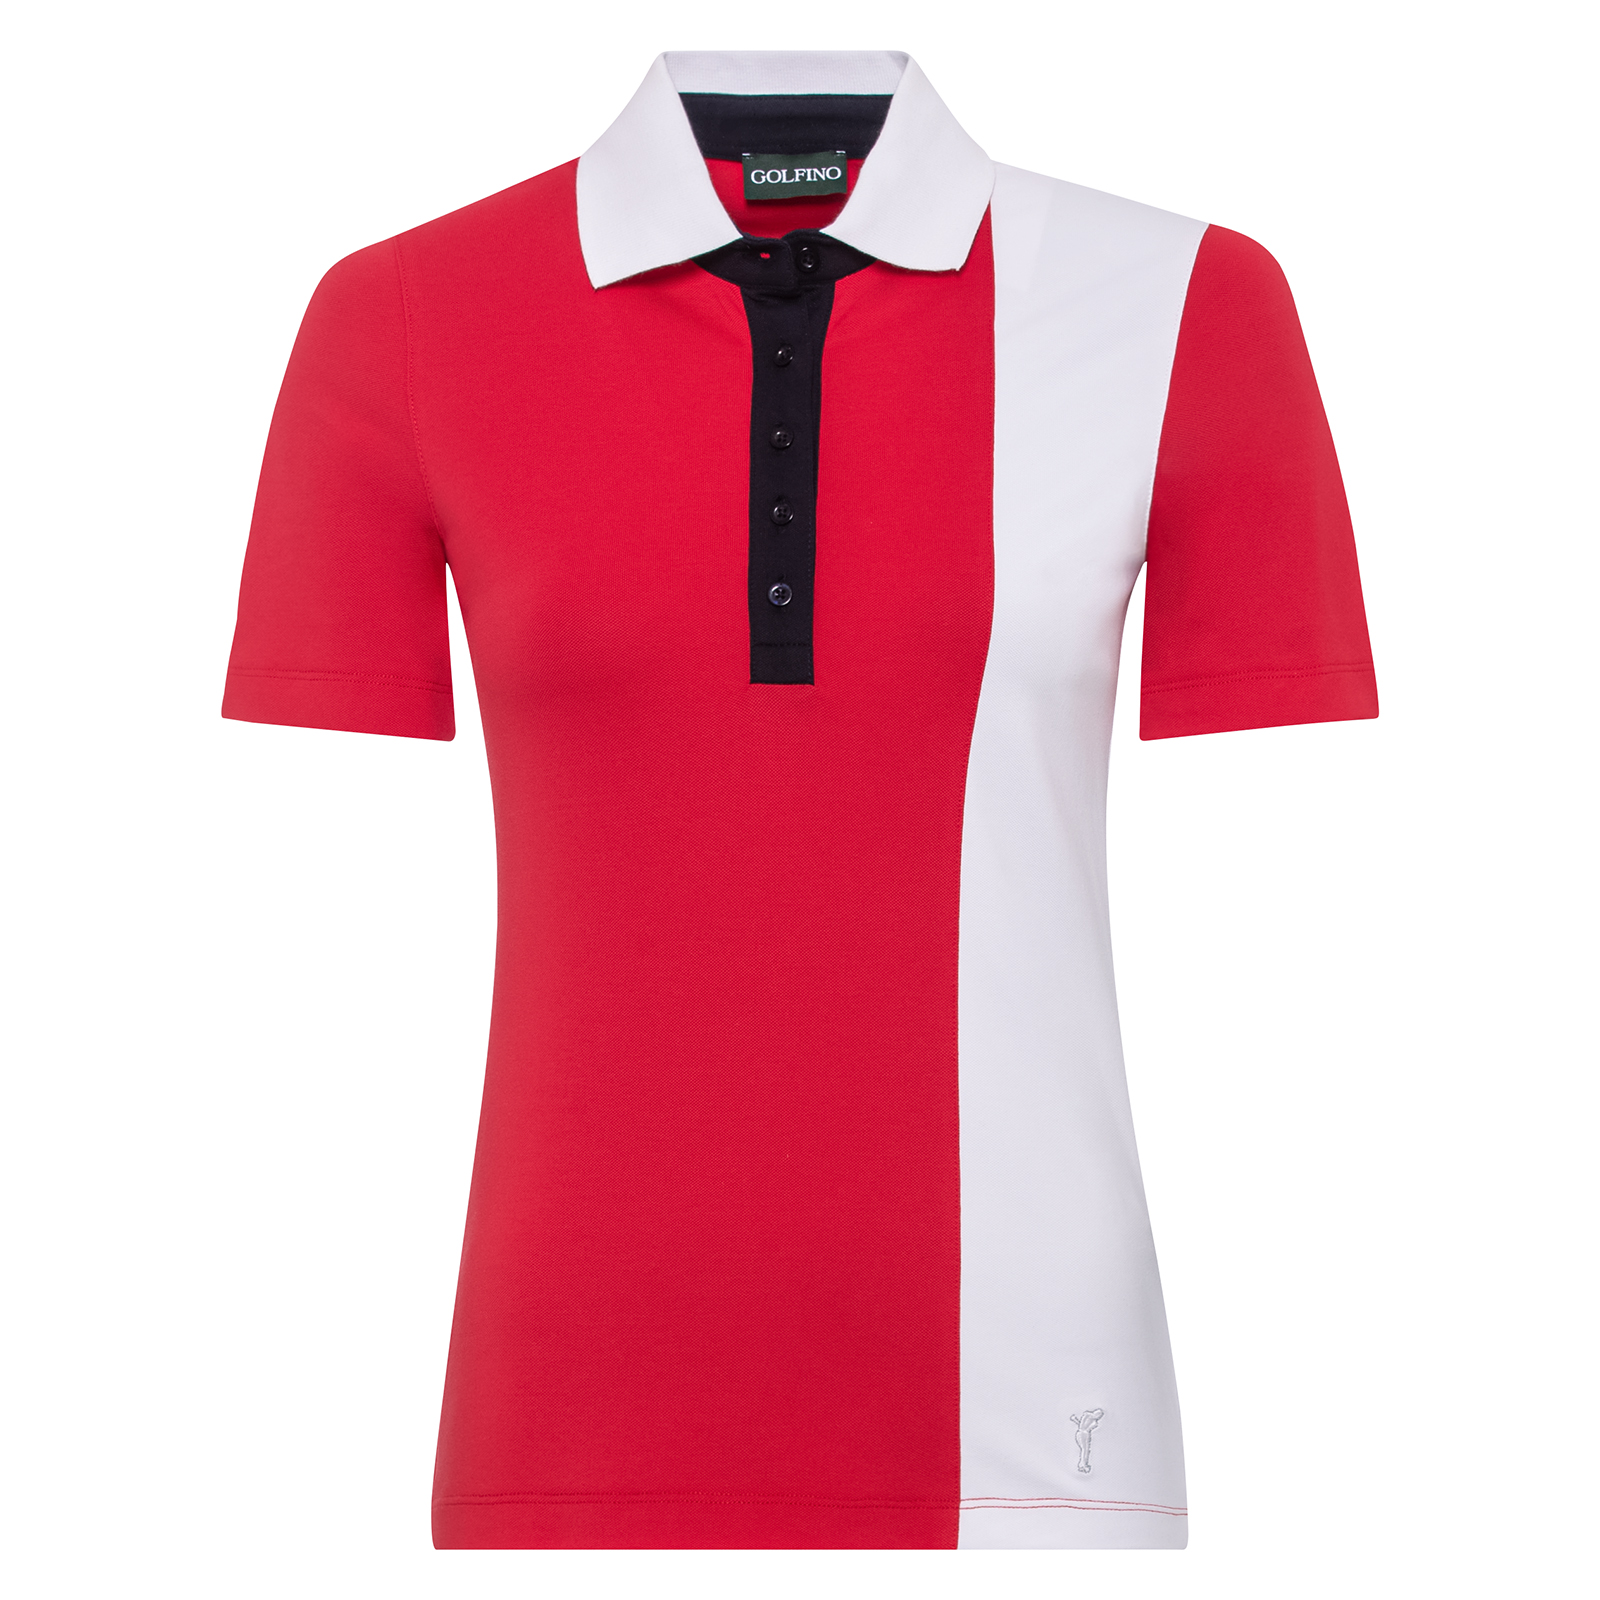 Ladies' modern, short-sleeve golf polo shirt with sun protection